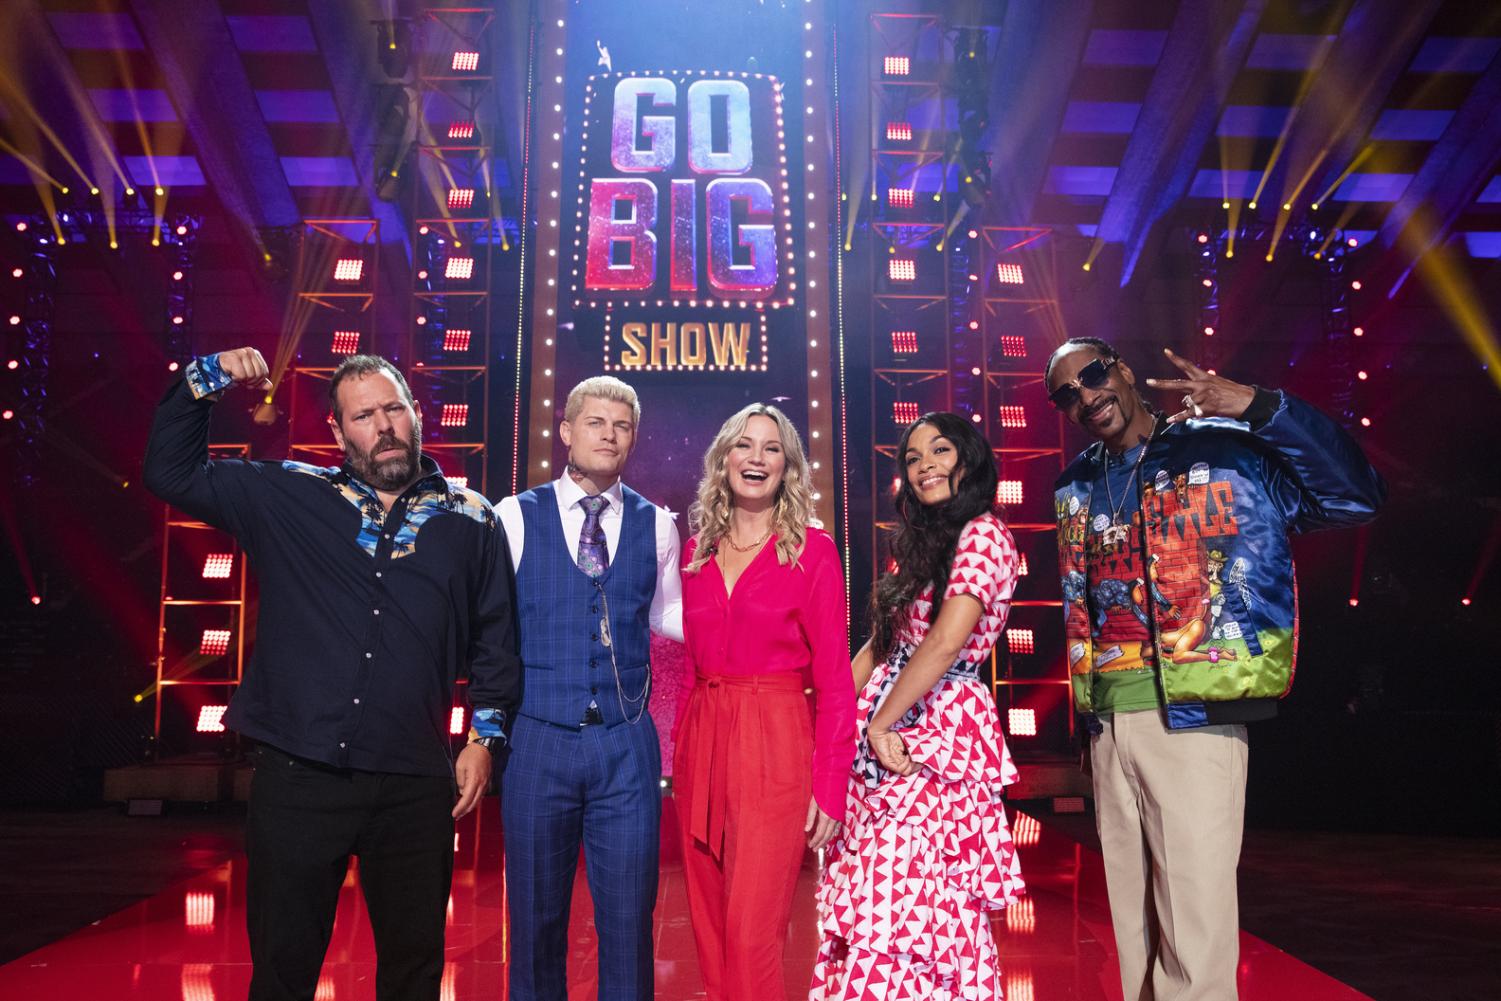 TBS 'Go Big Show' filming season two at Macon Coliseum - The Macon Newsroom